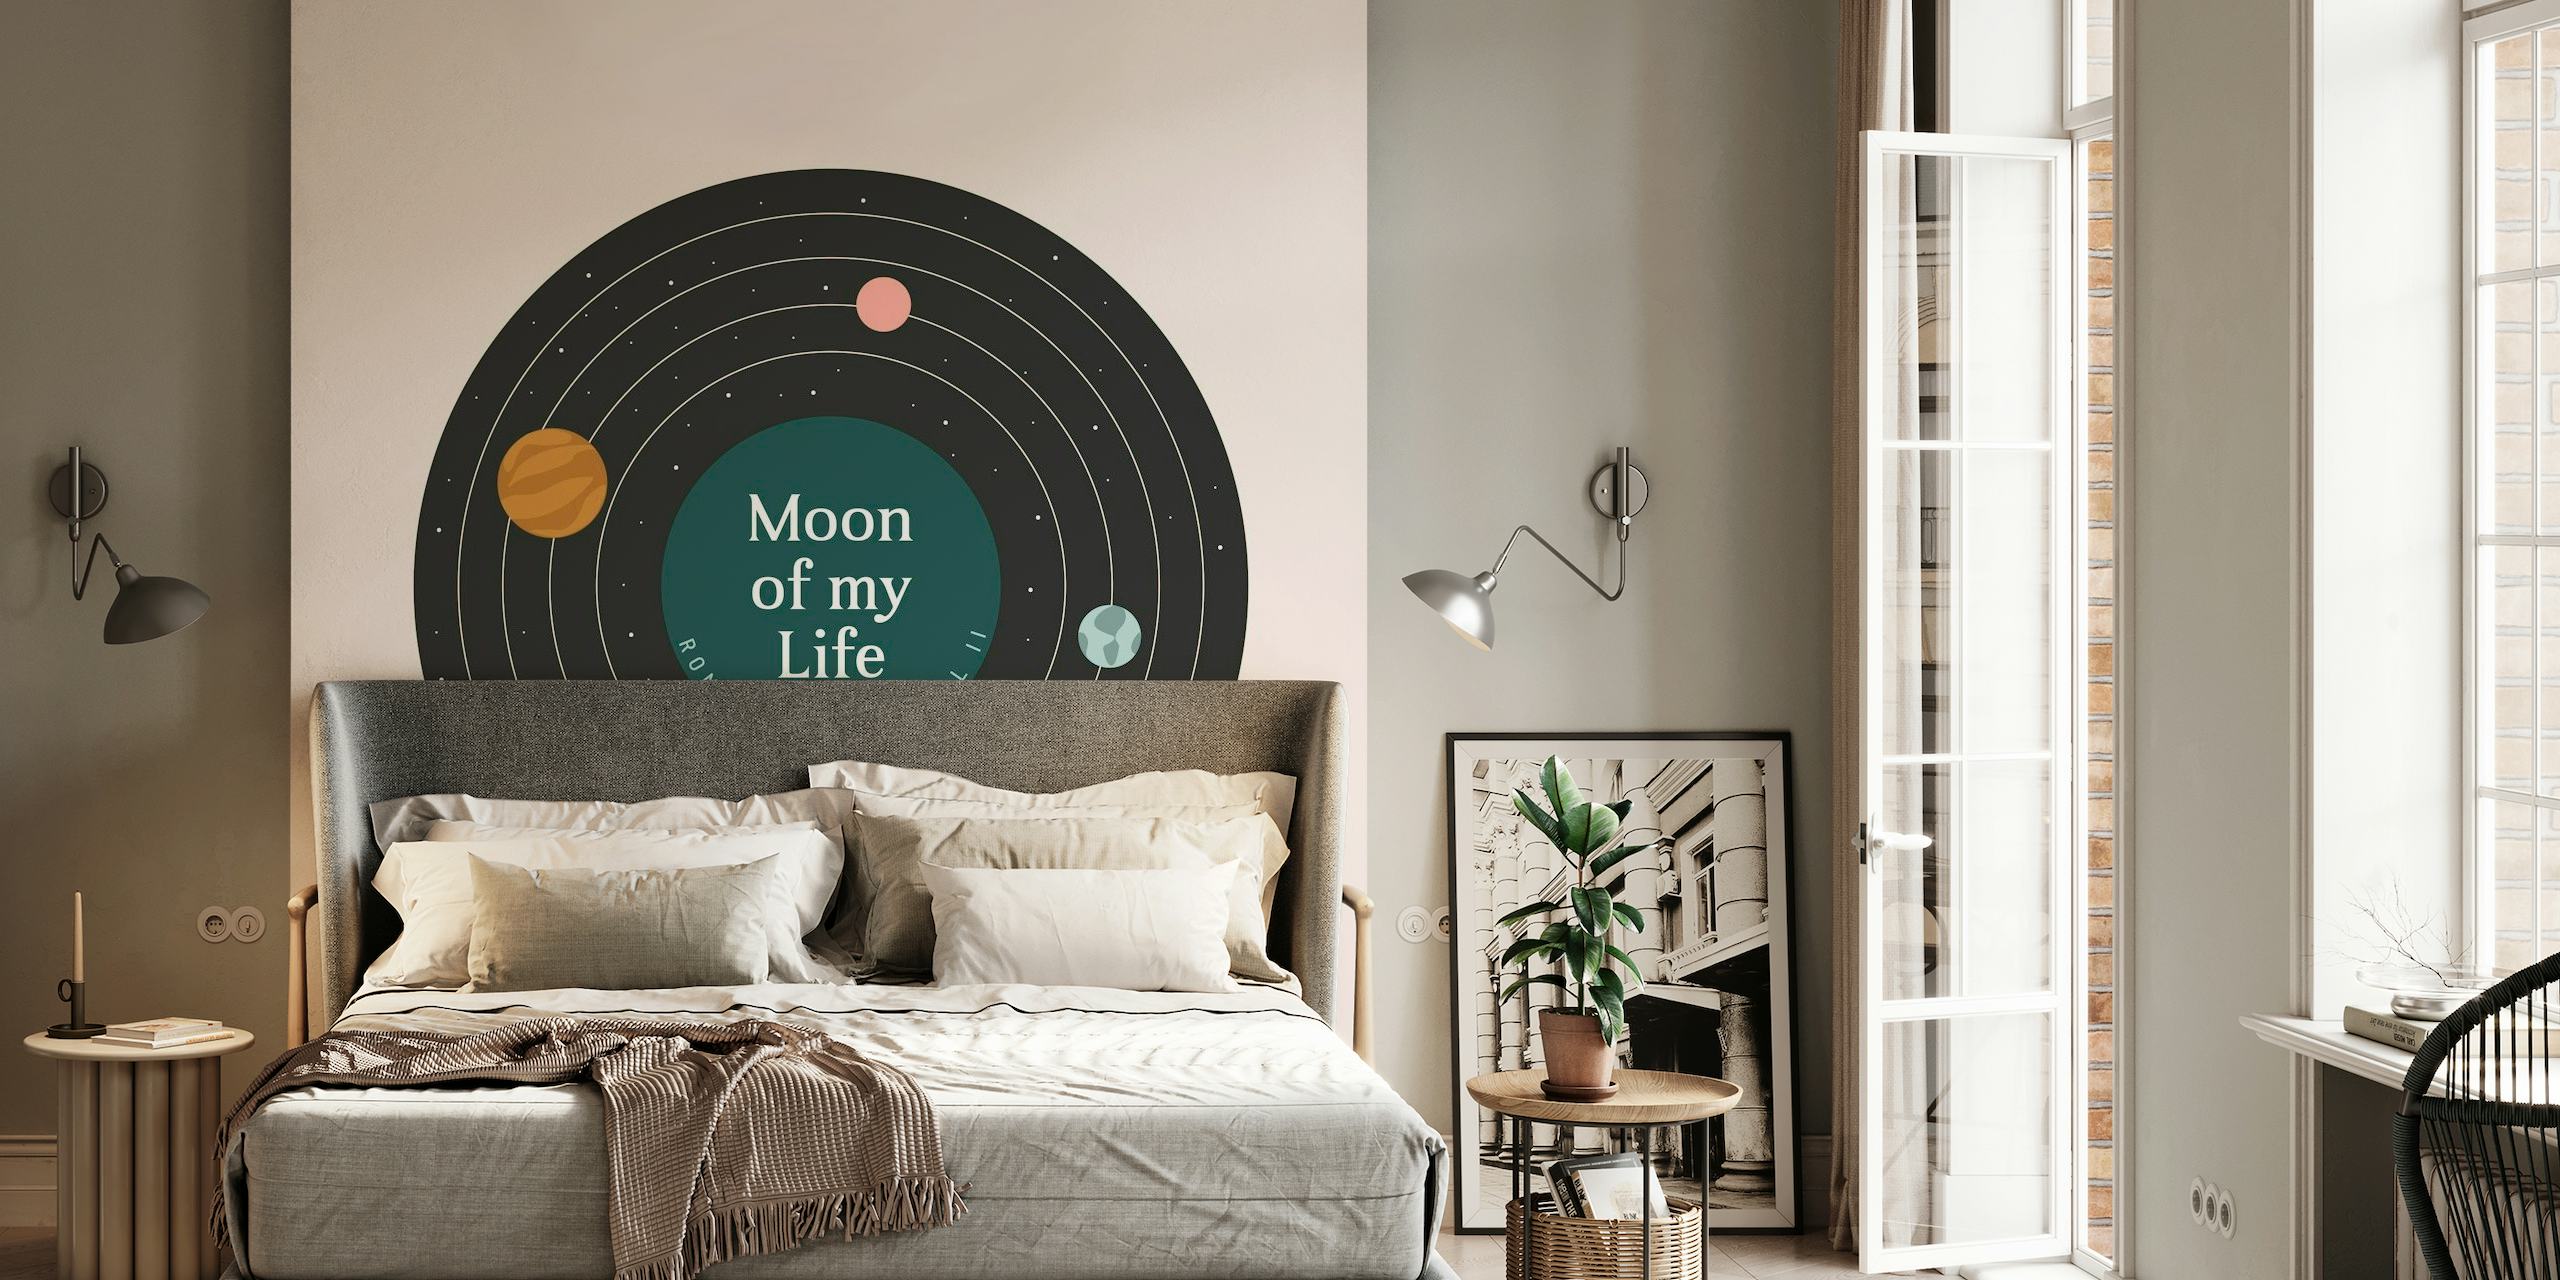 Moon of my life wallpaper